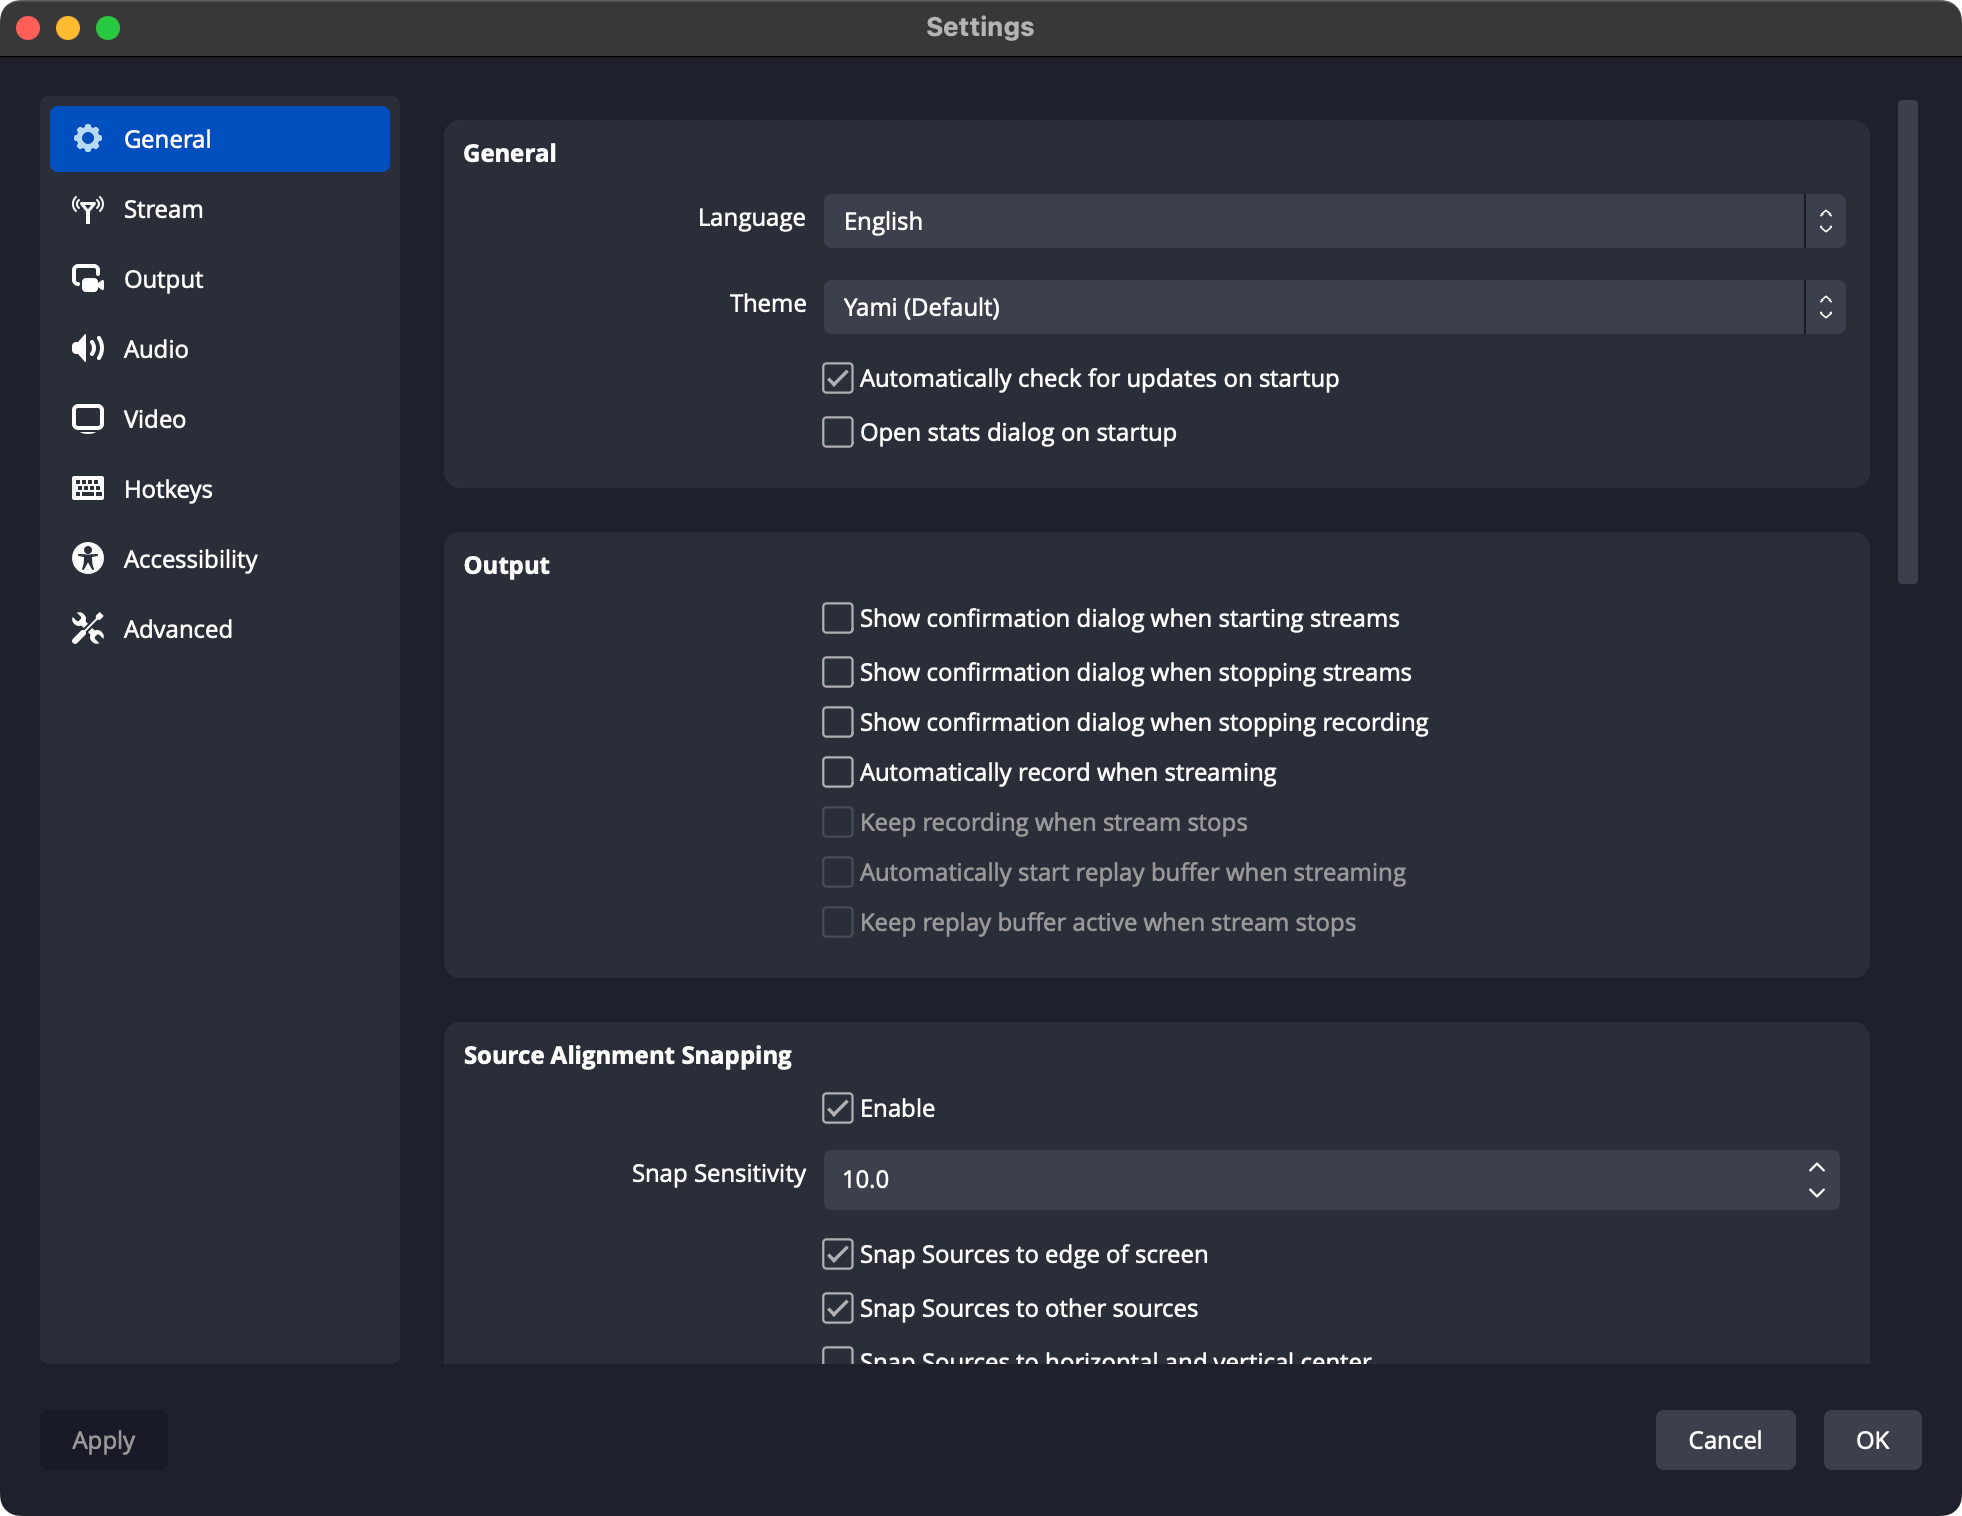 OBS Studio's settings window showing the Yami theme